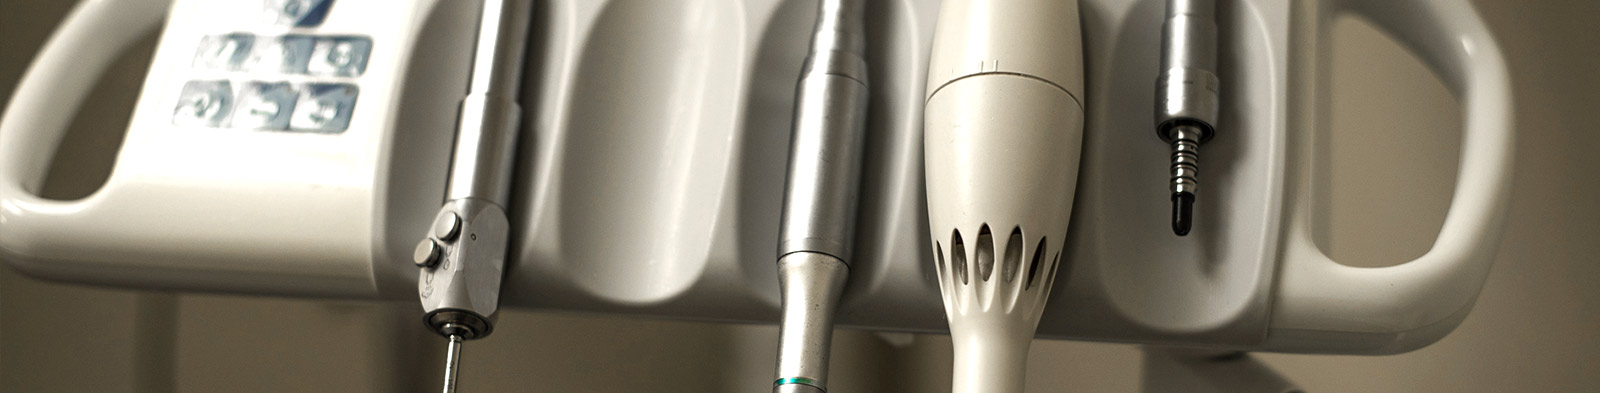 Future of Dentistry - Equipment